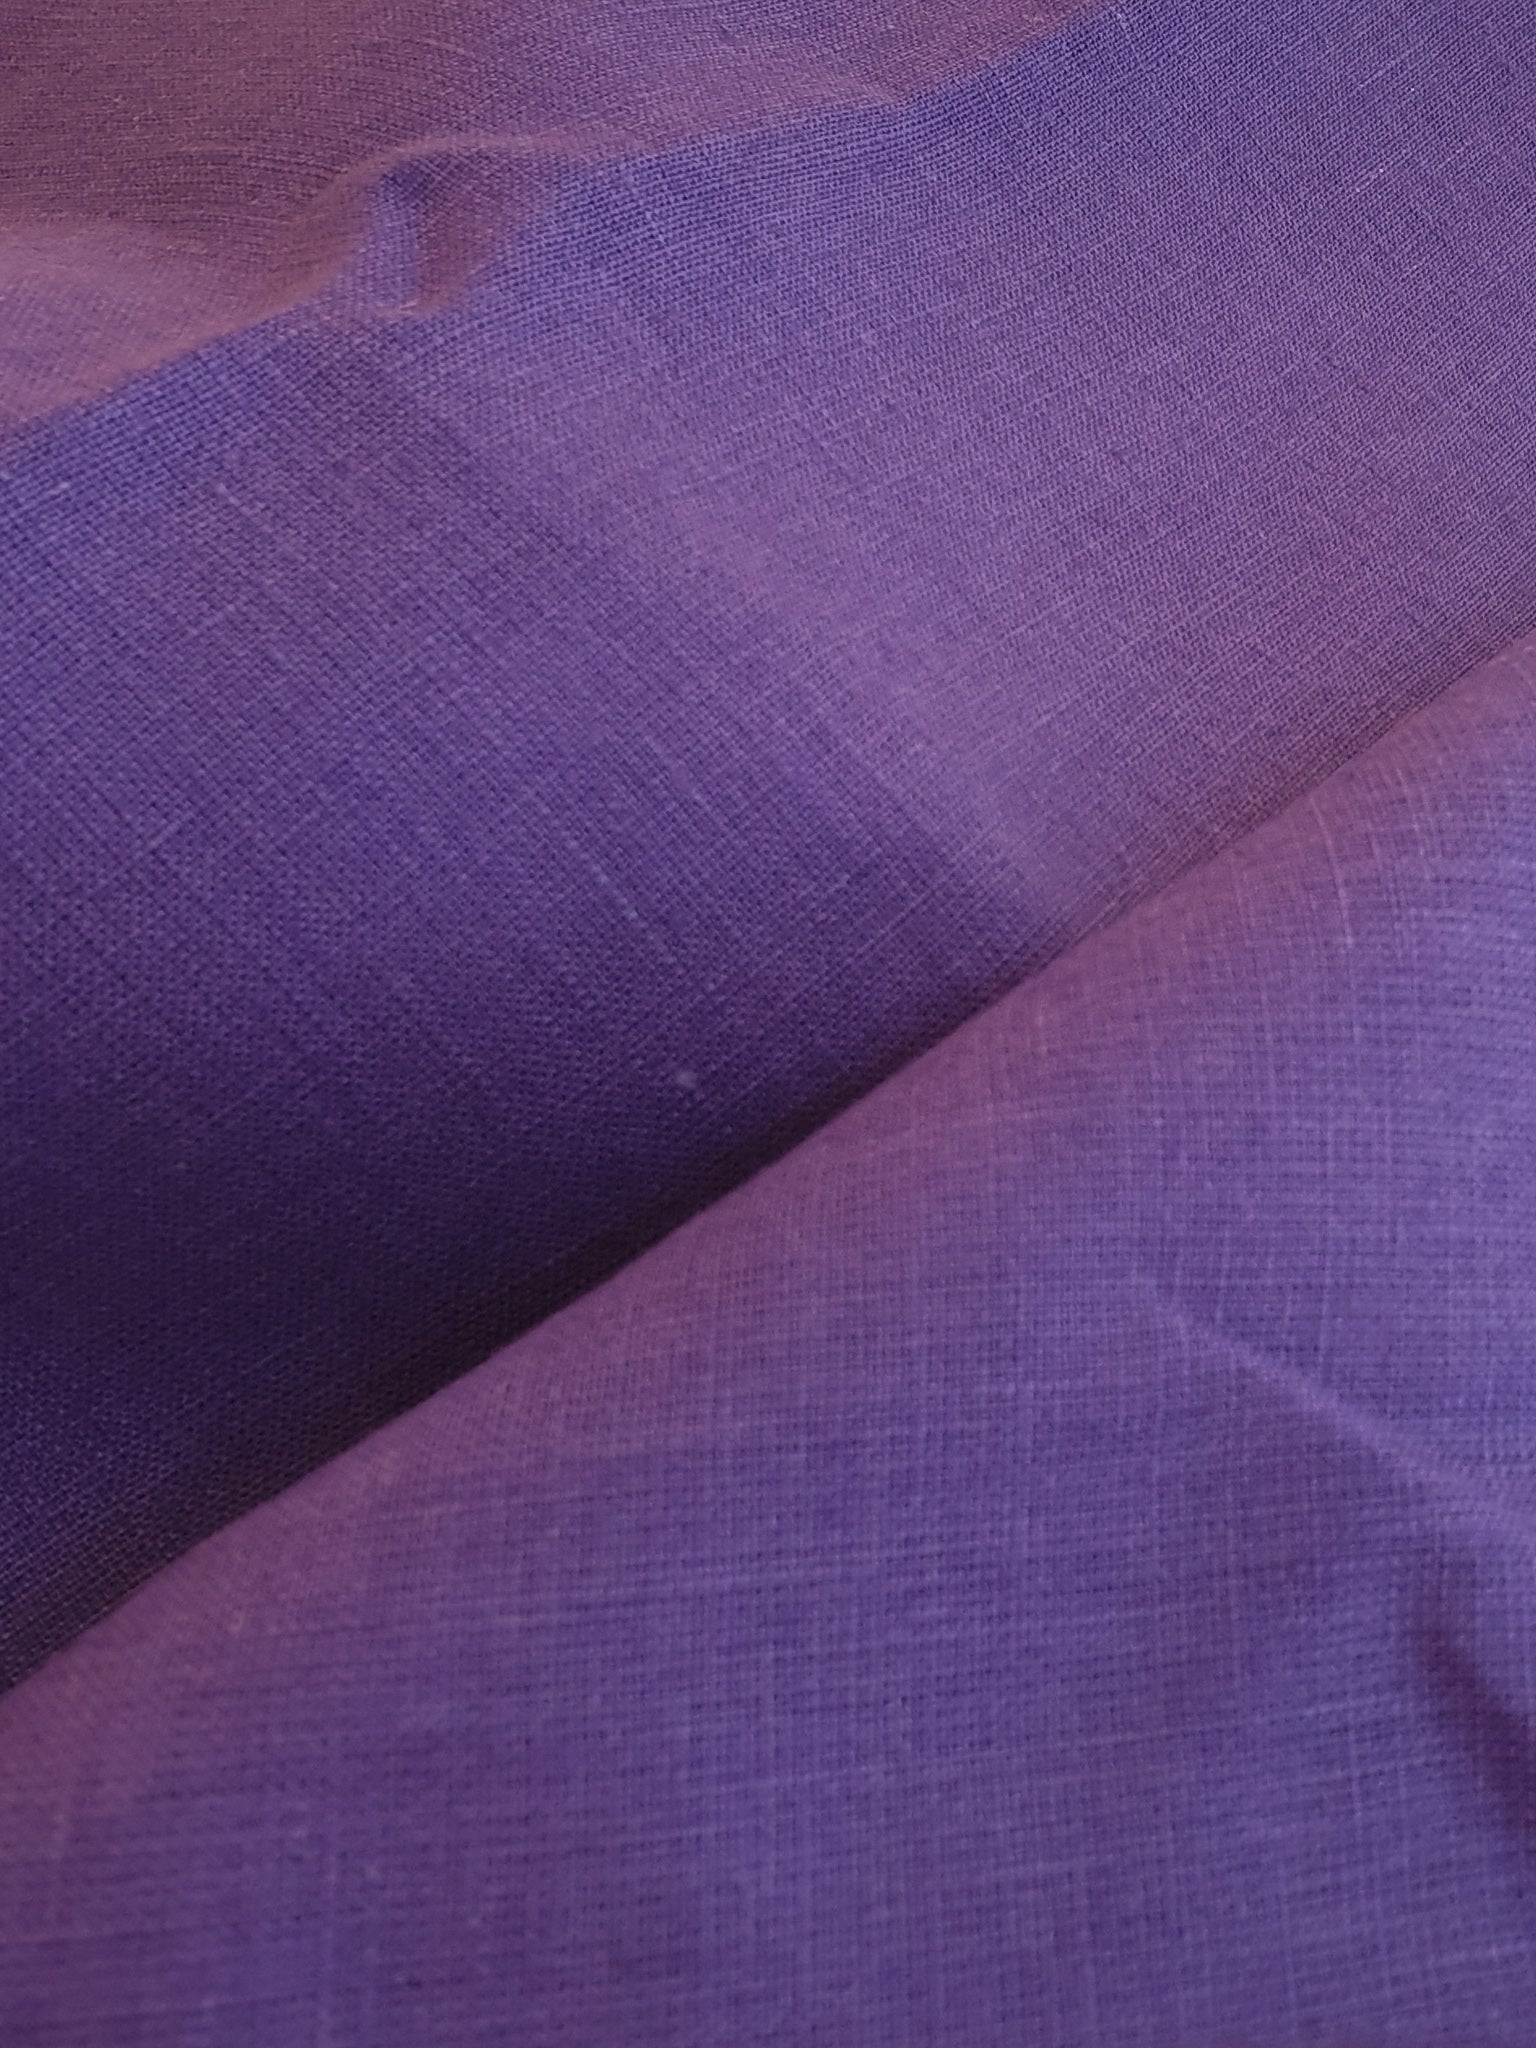 No. 386 linen fabric blue violet